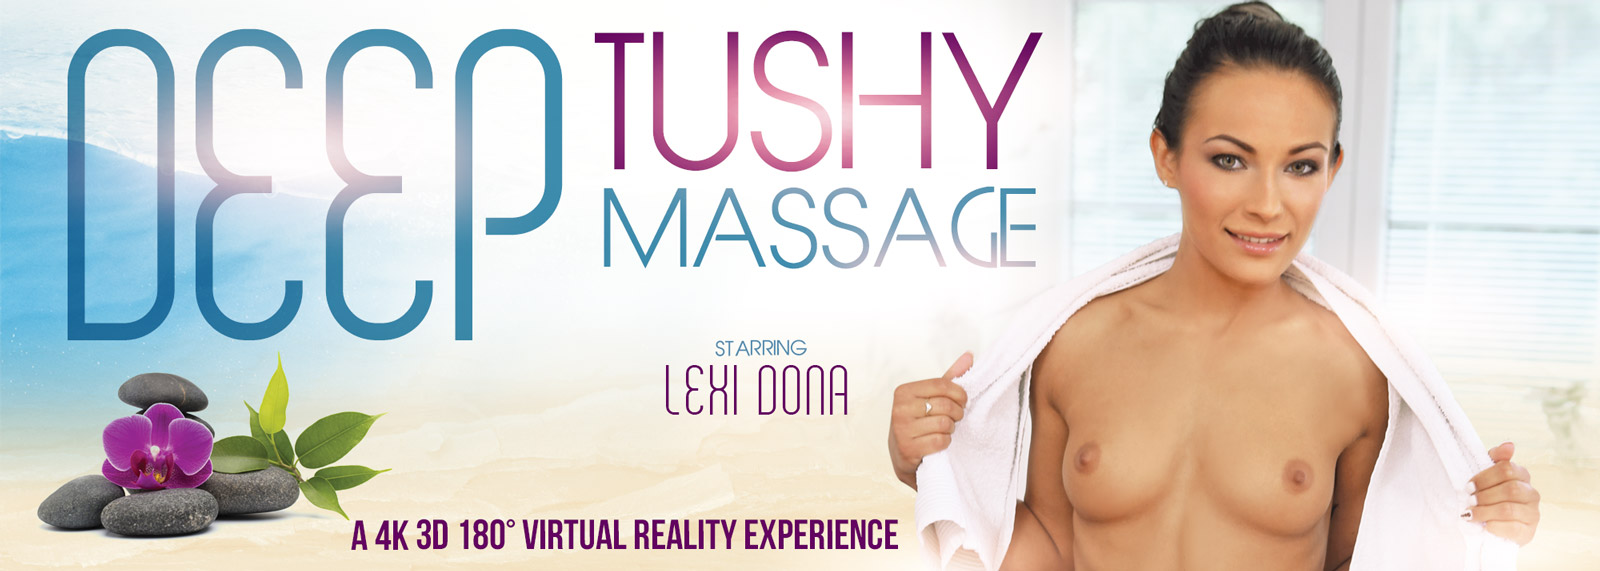 Deep Tushy Massage - VR Porn Video, Starring: Lexi Dona